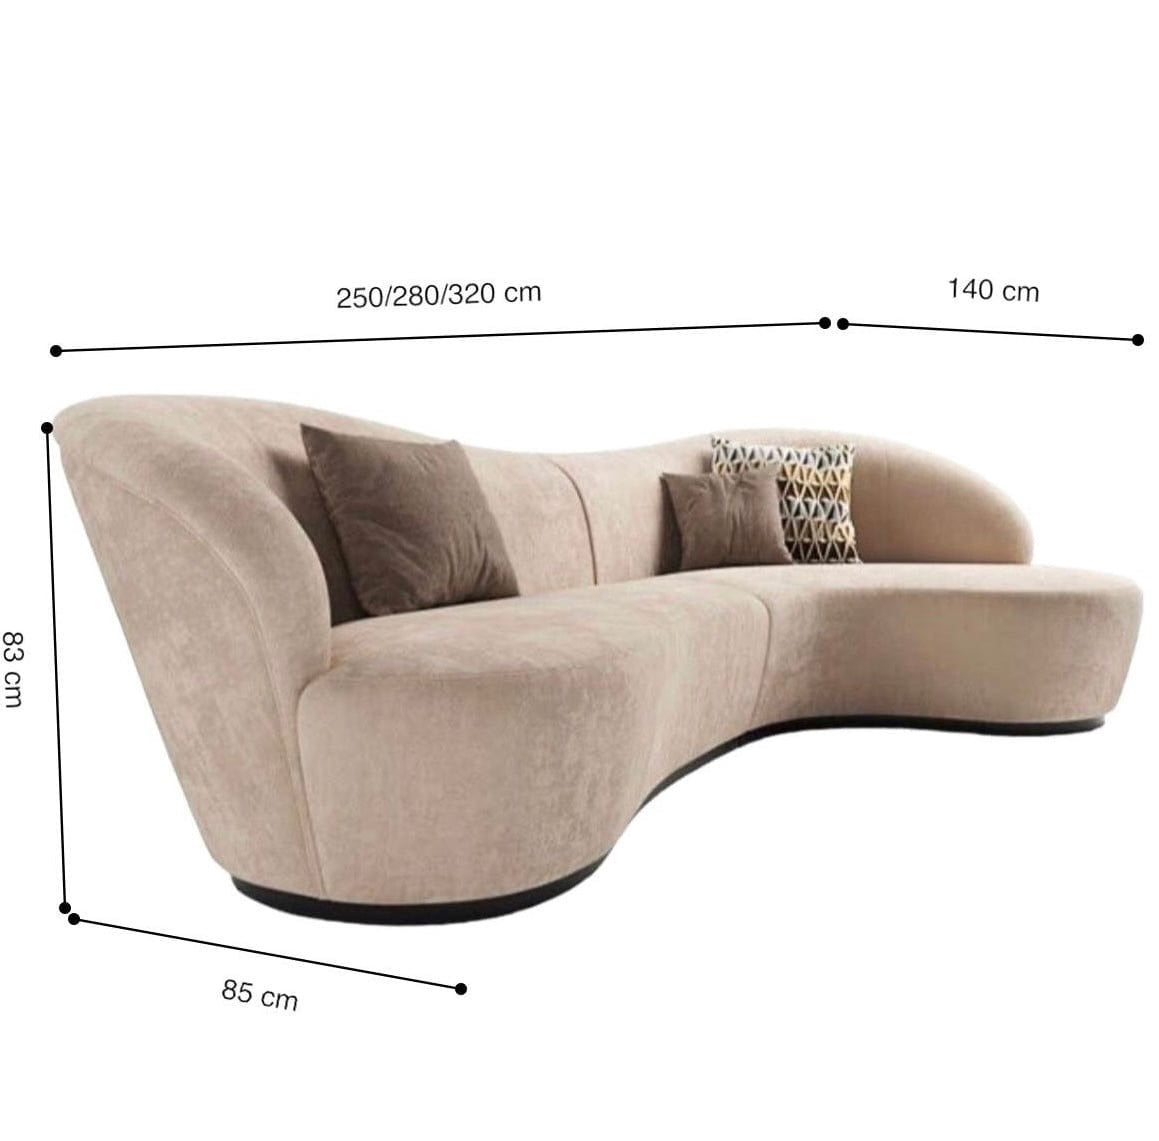 Home Atelier Rai Sectional Curve Sofa